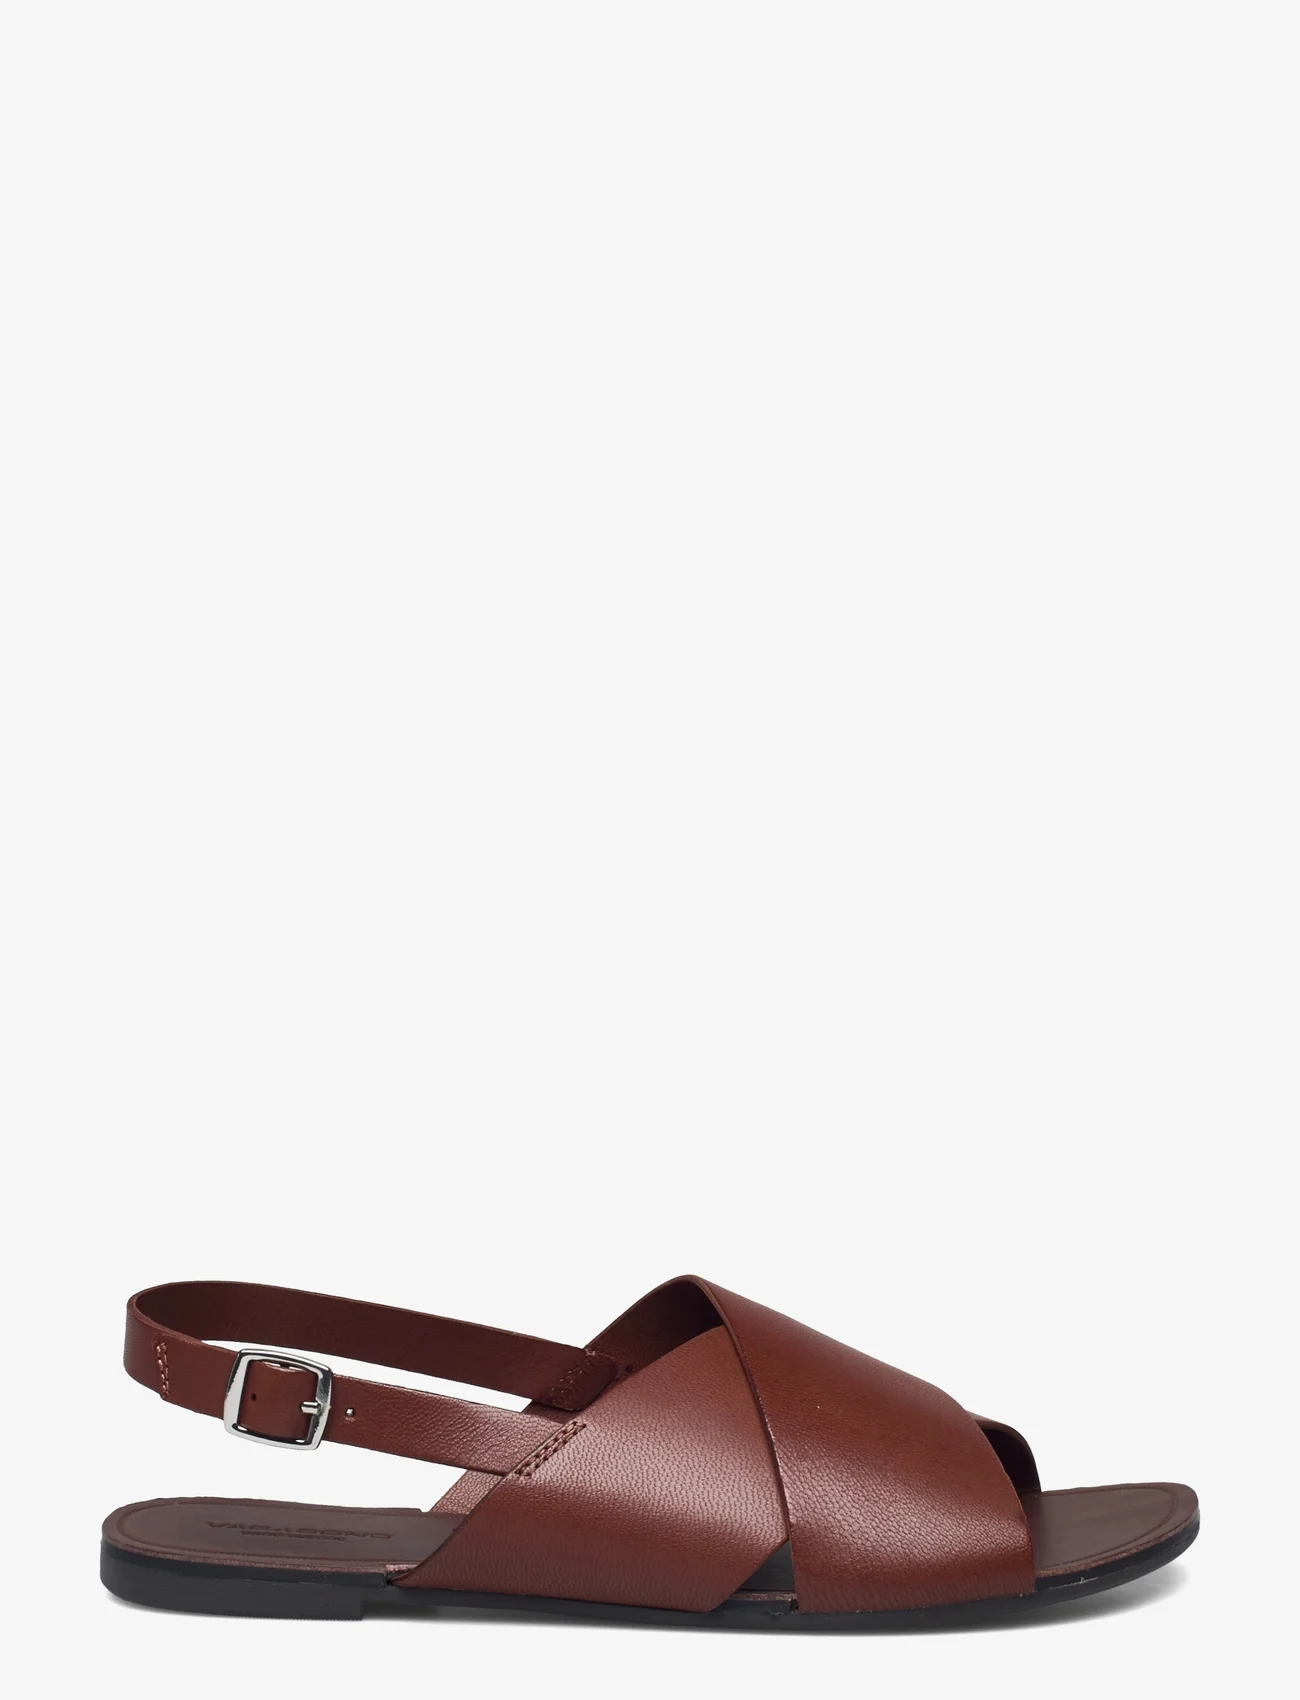 VAGABOND - TIA - flat sandals - brown - 1